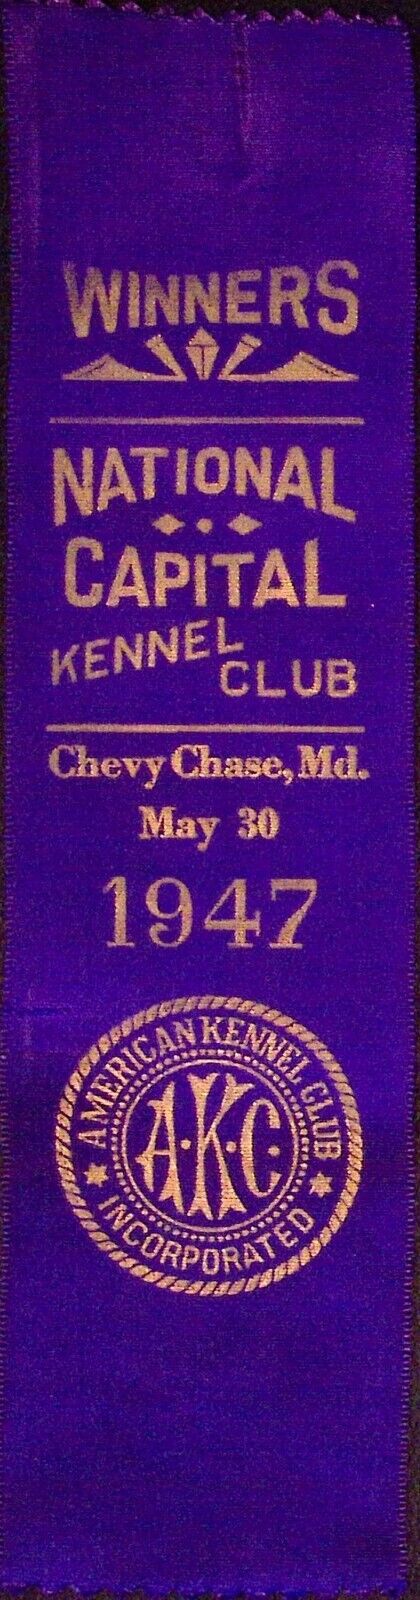 National Capital Kennel Club Ribbon 1947 Chevy Chase MD AKC American Kennel Club